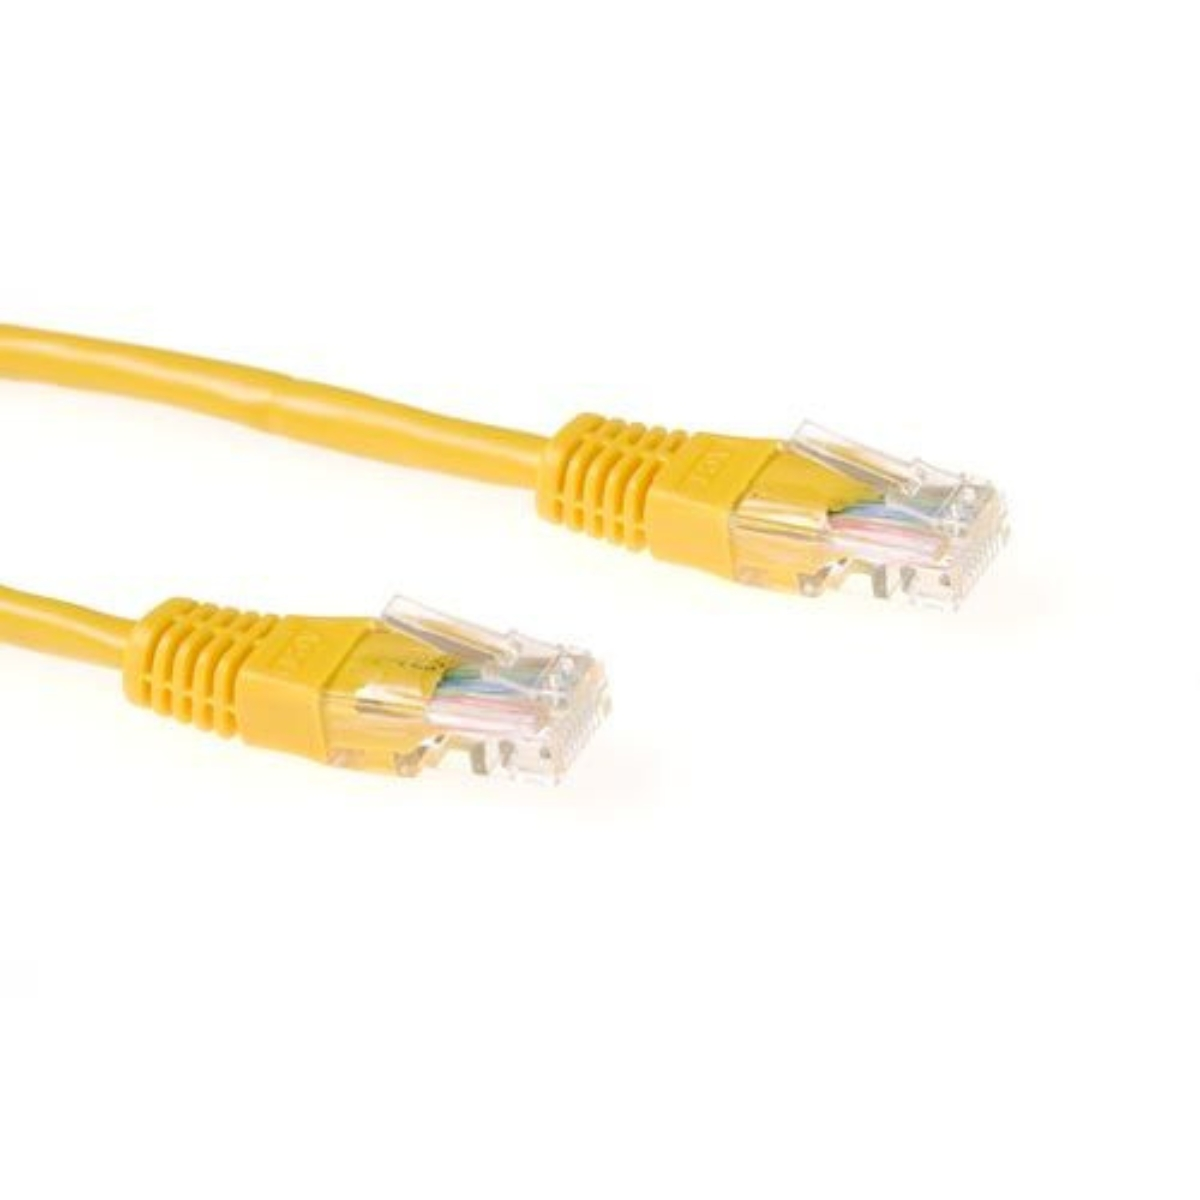 IB8802 Netzwerkkabel, ACT CAT6, U/UTP m 2